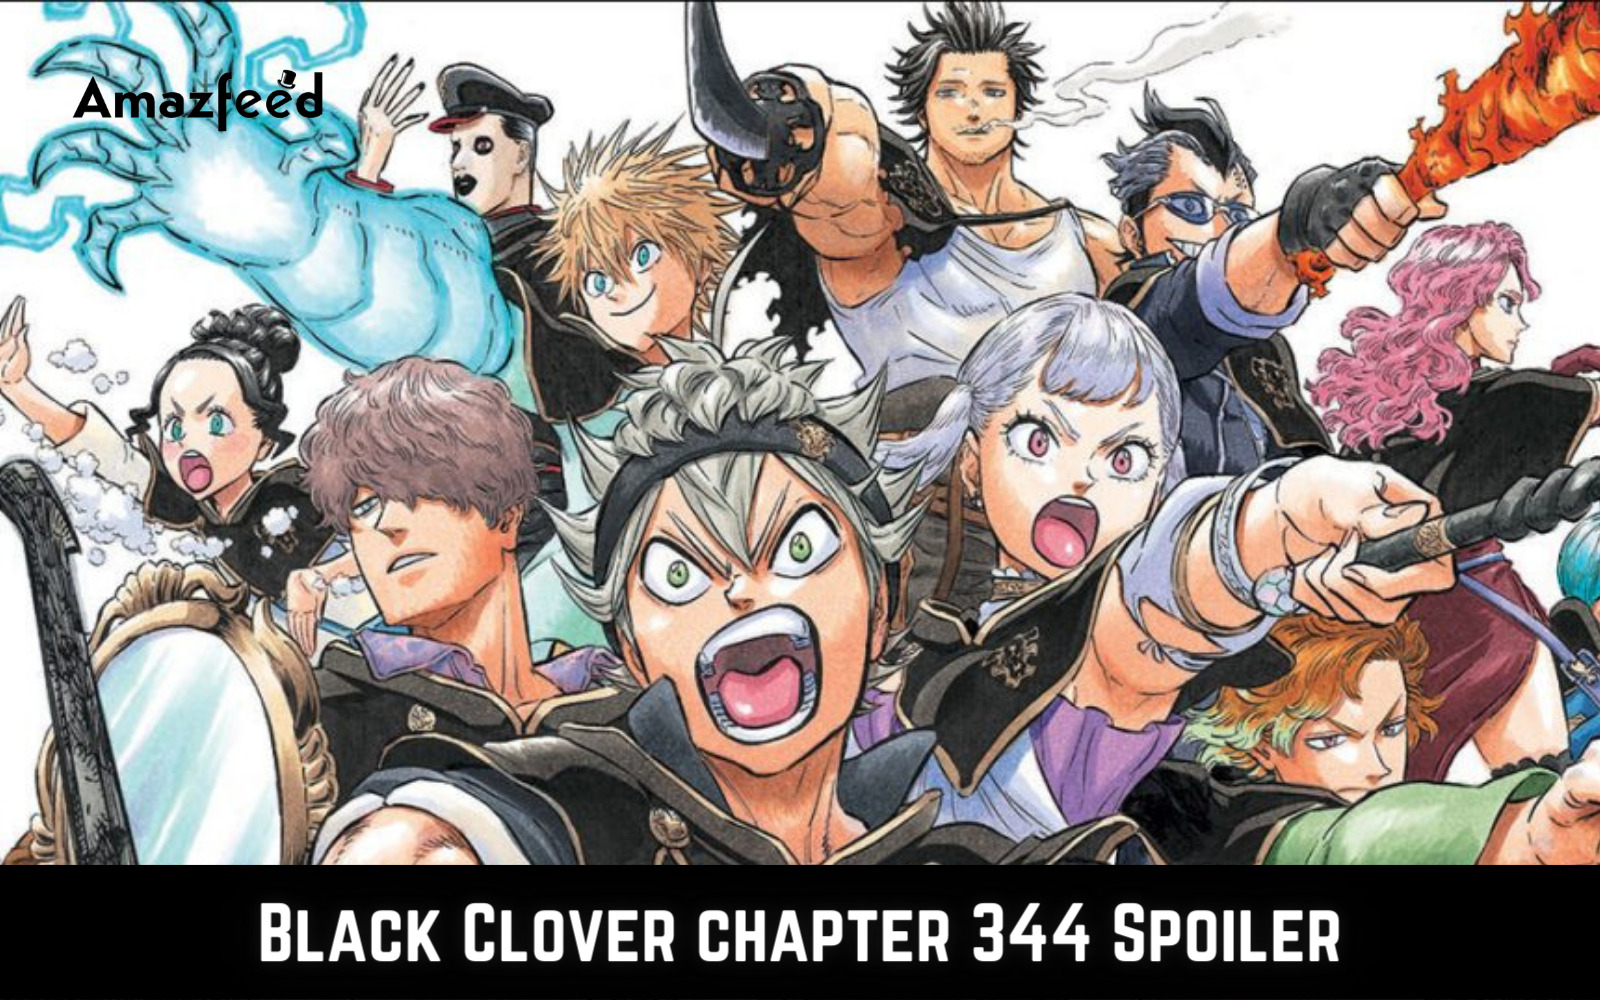 Black Clover Chapter 344.1